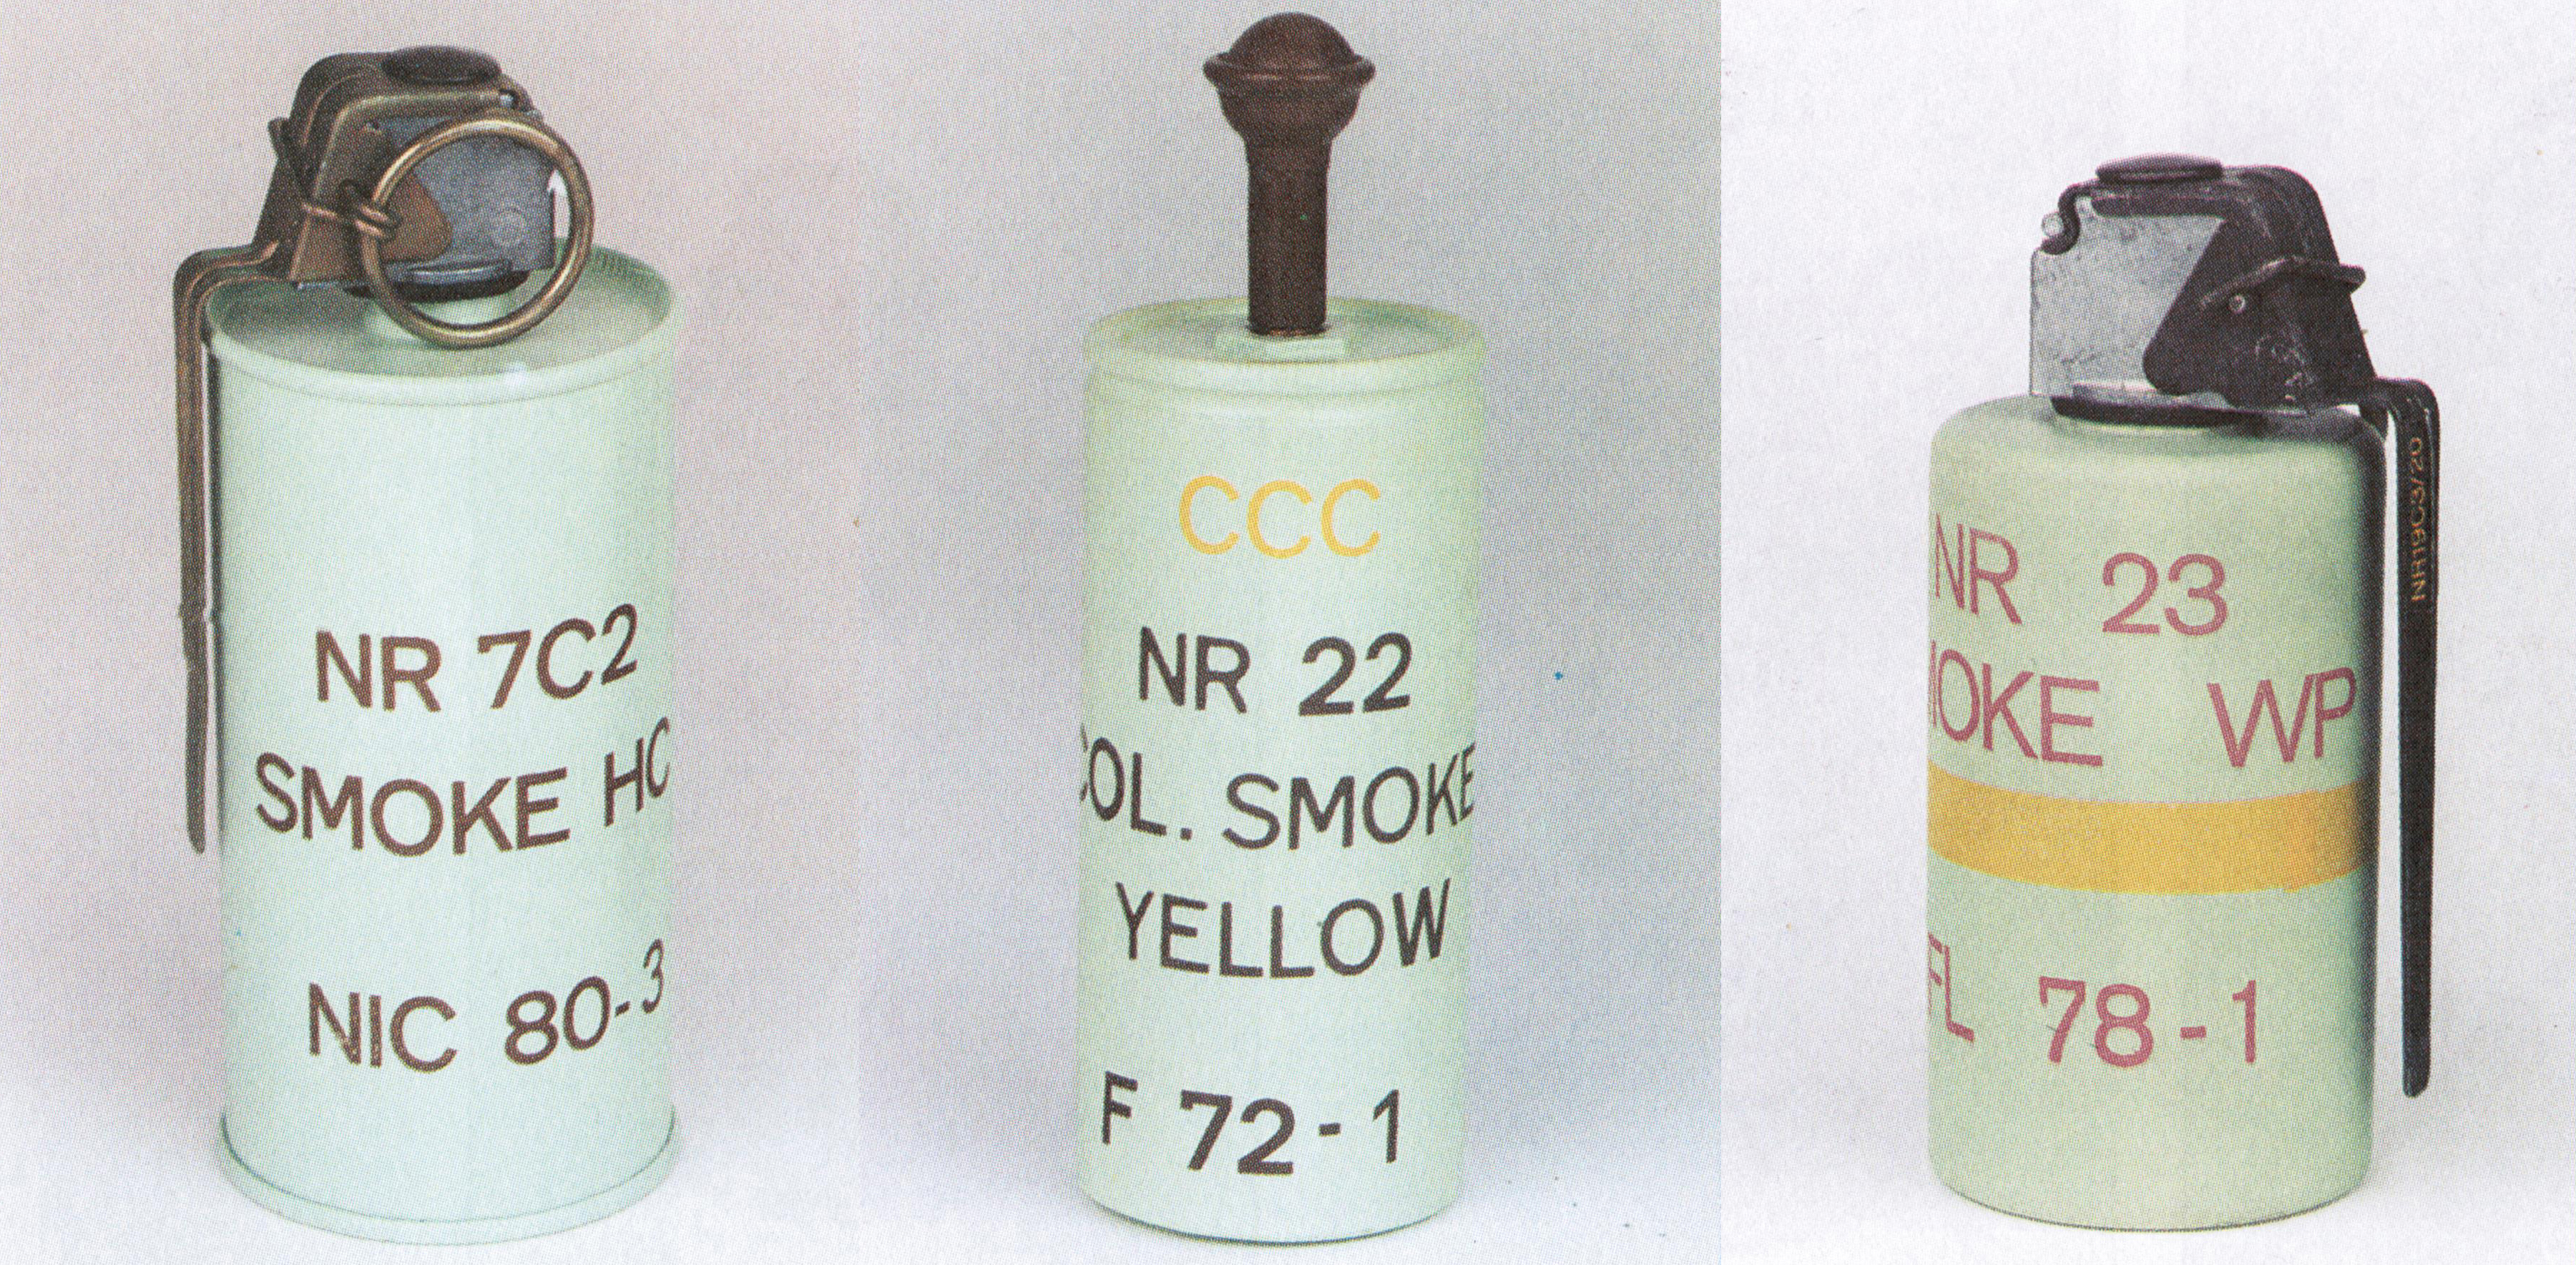 The nr. 7C2, nr. 22, and nr. 23 grenades